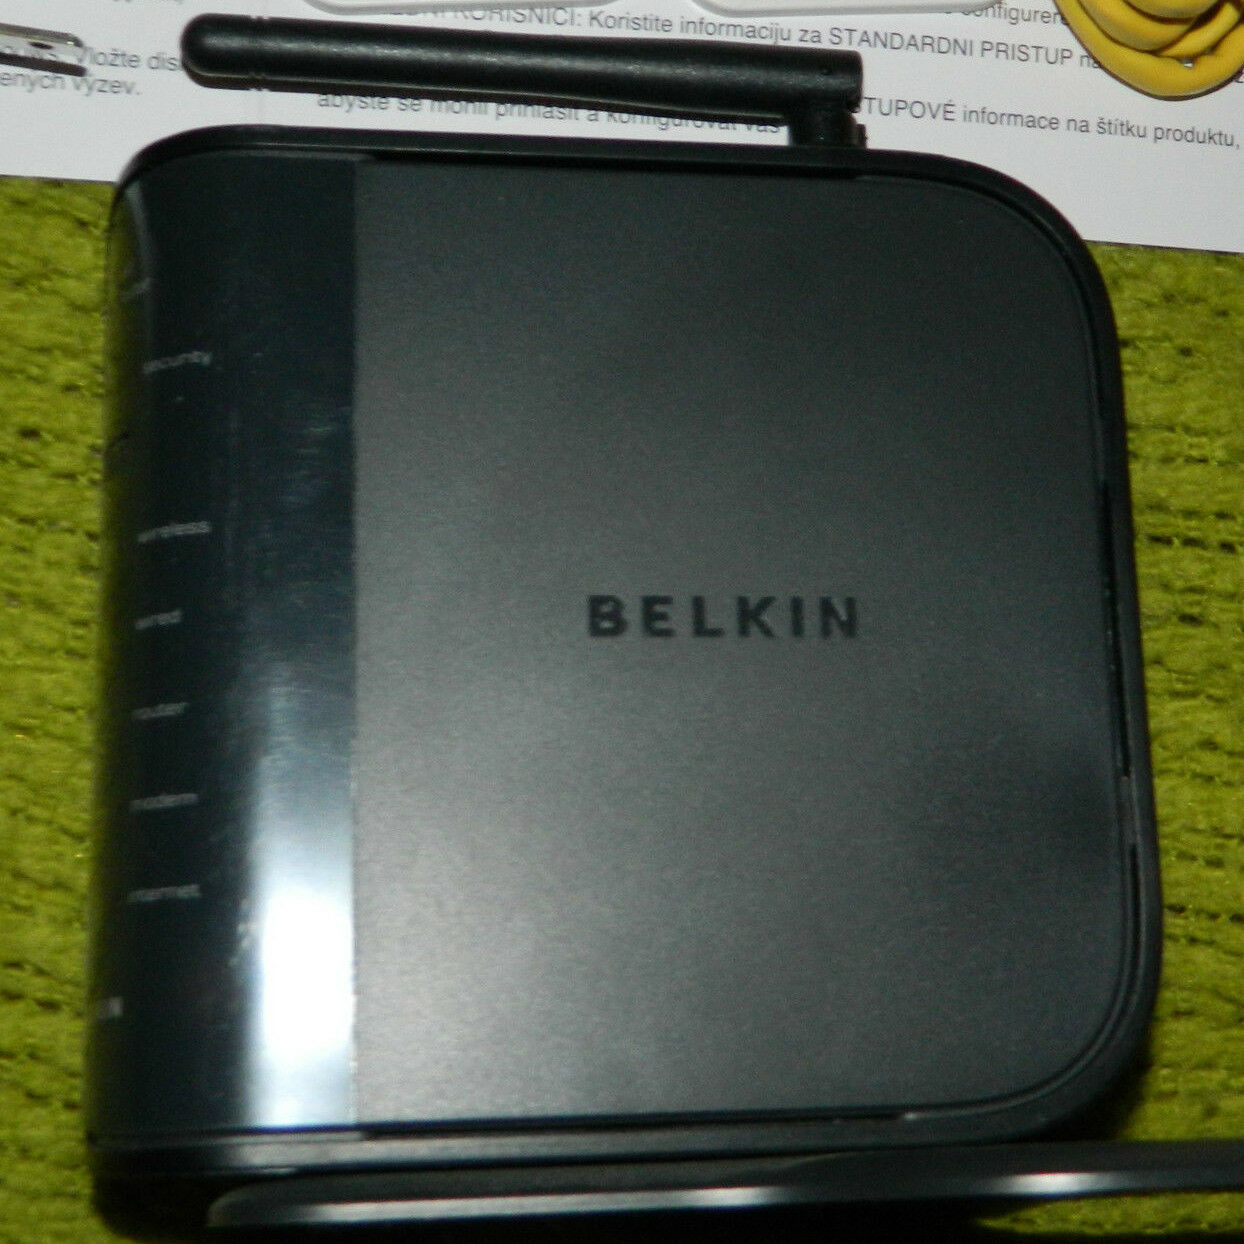 Belkin Brand N150 150 Mbps 4-Port 10/100 Wireless N Router (F6D4230-4) V1 - $16.79